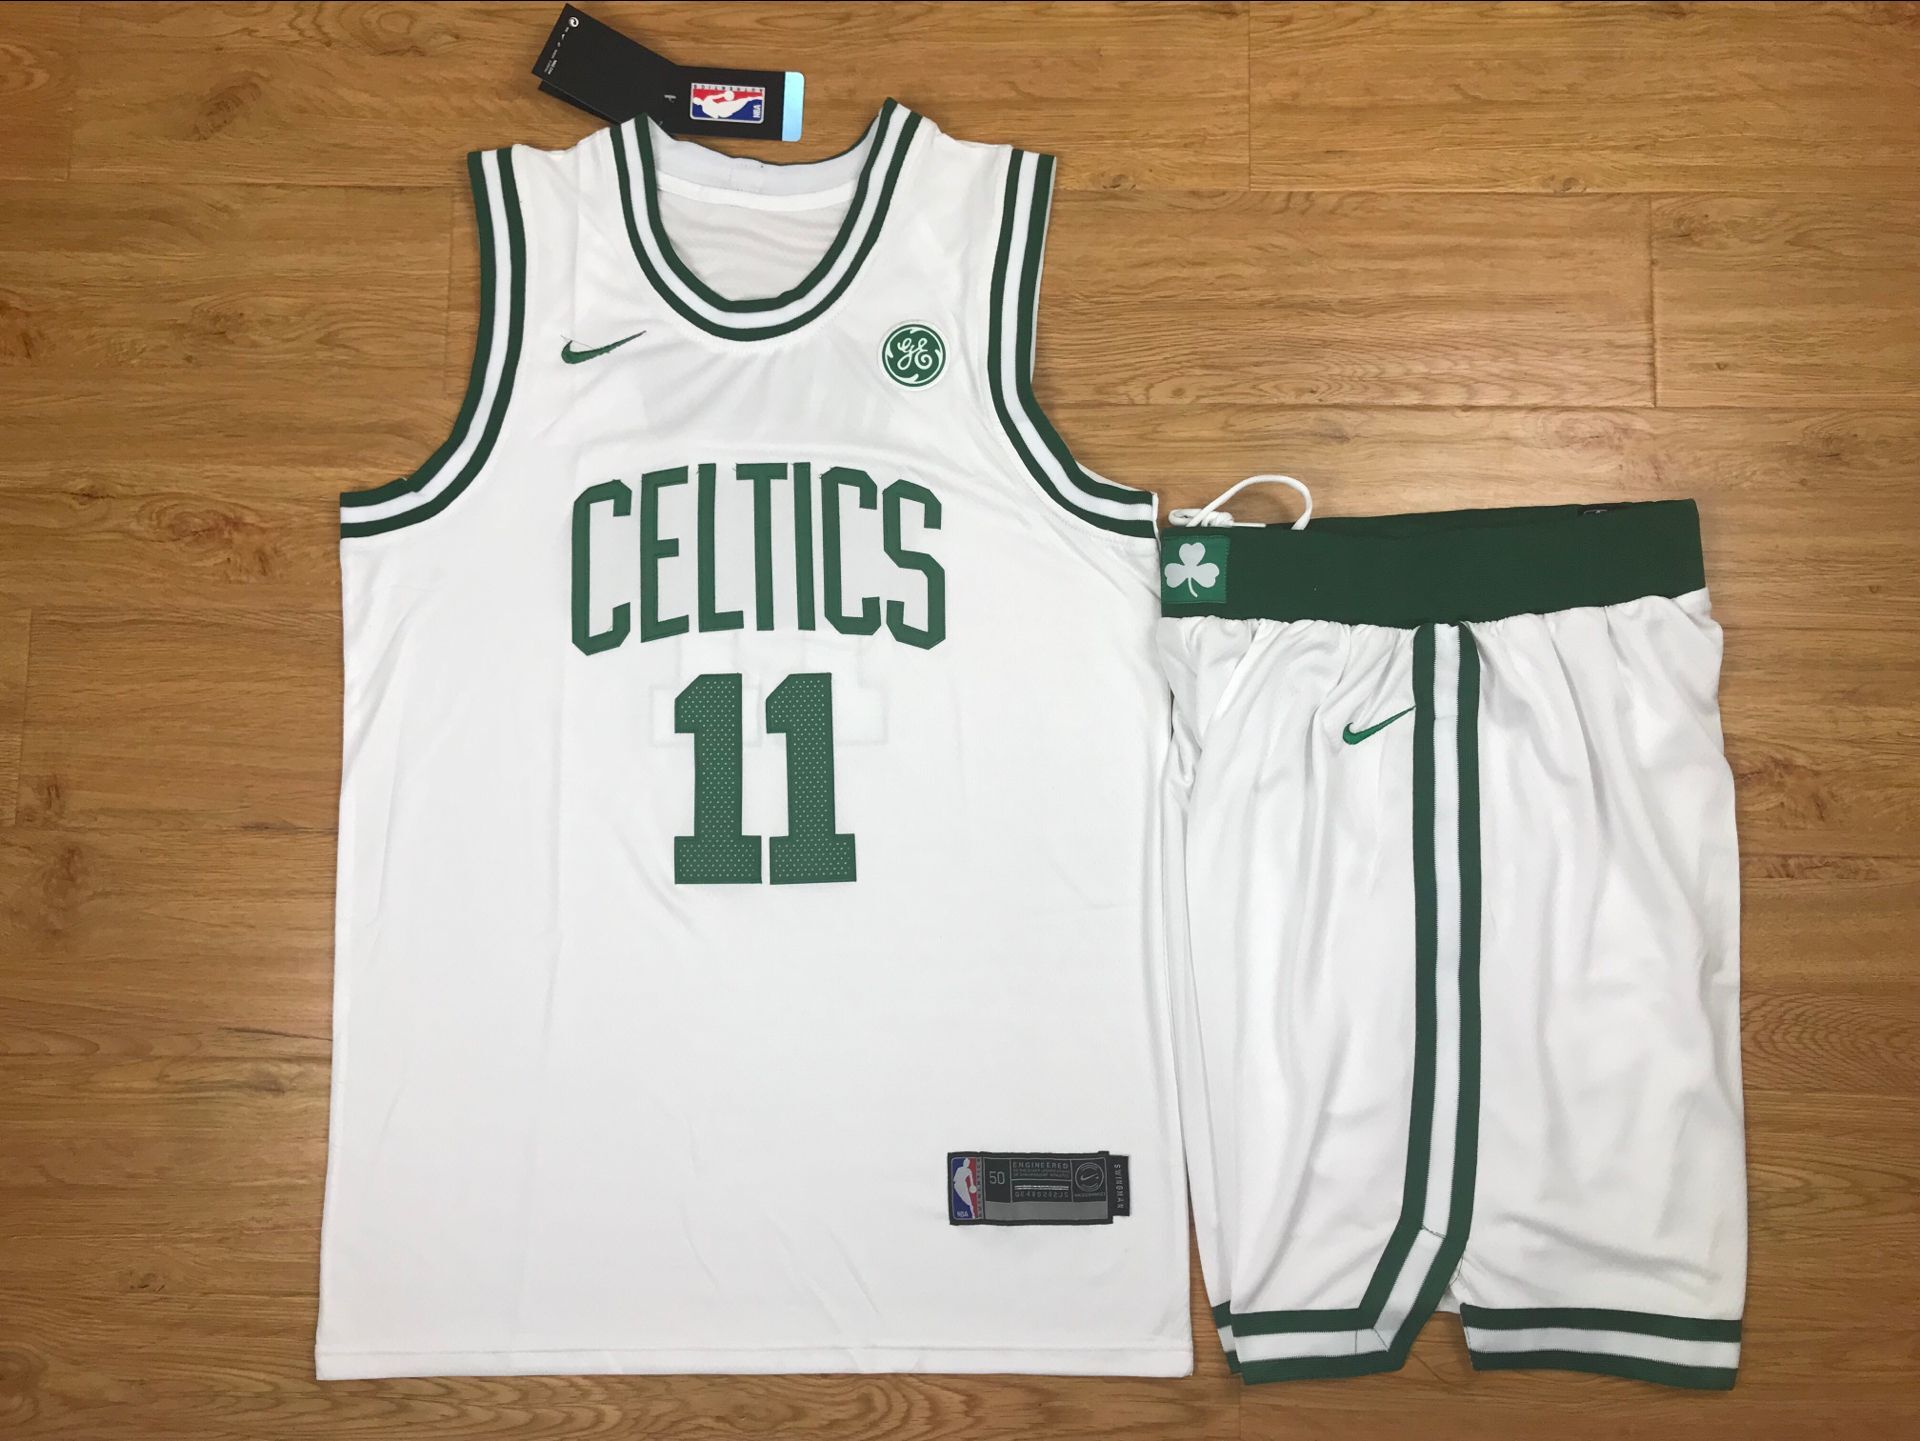 Celtics 11 Kyrie Irving White Nike Swingman Jersey(With Shorts)